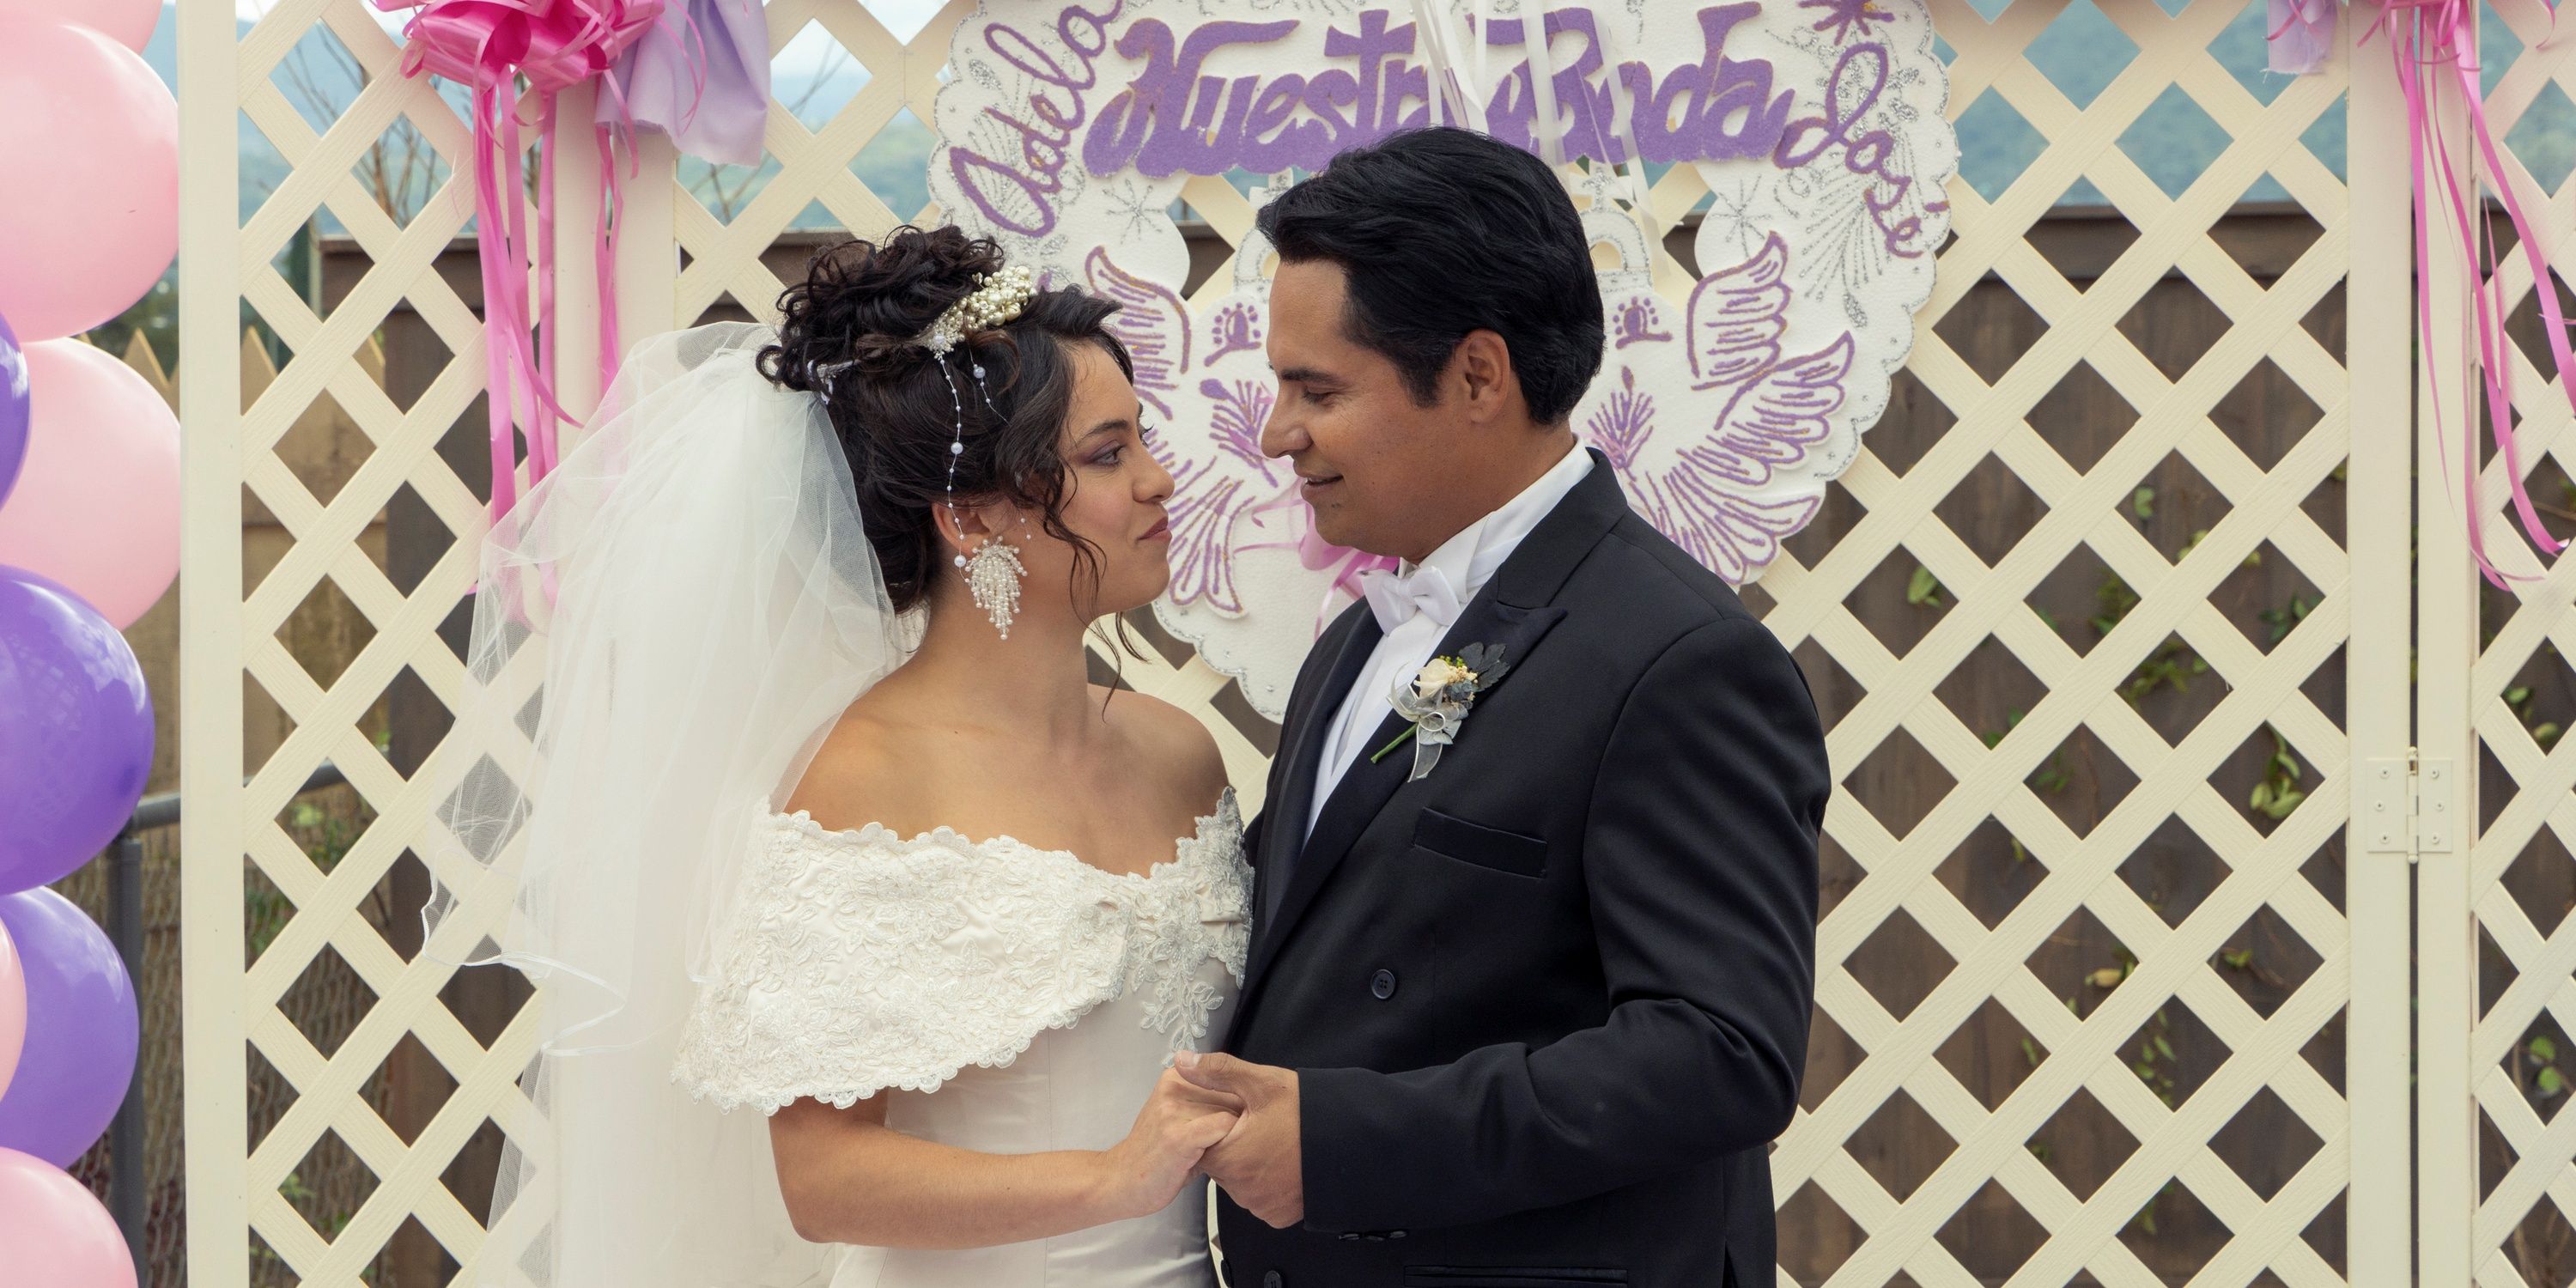 Michael Peña as José Hernandez and Rosa Salazar as Adela in A Million Miles Away